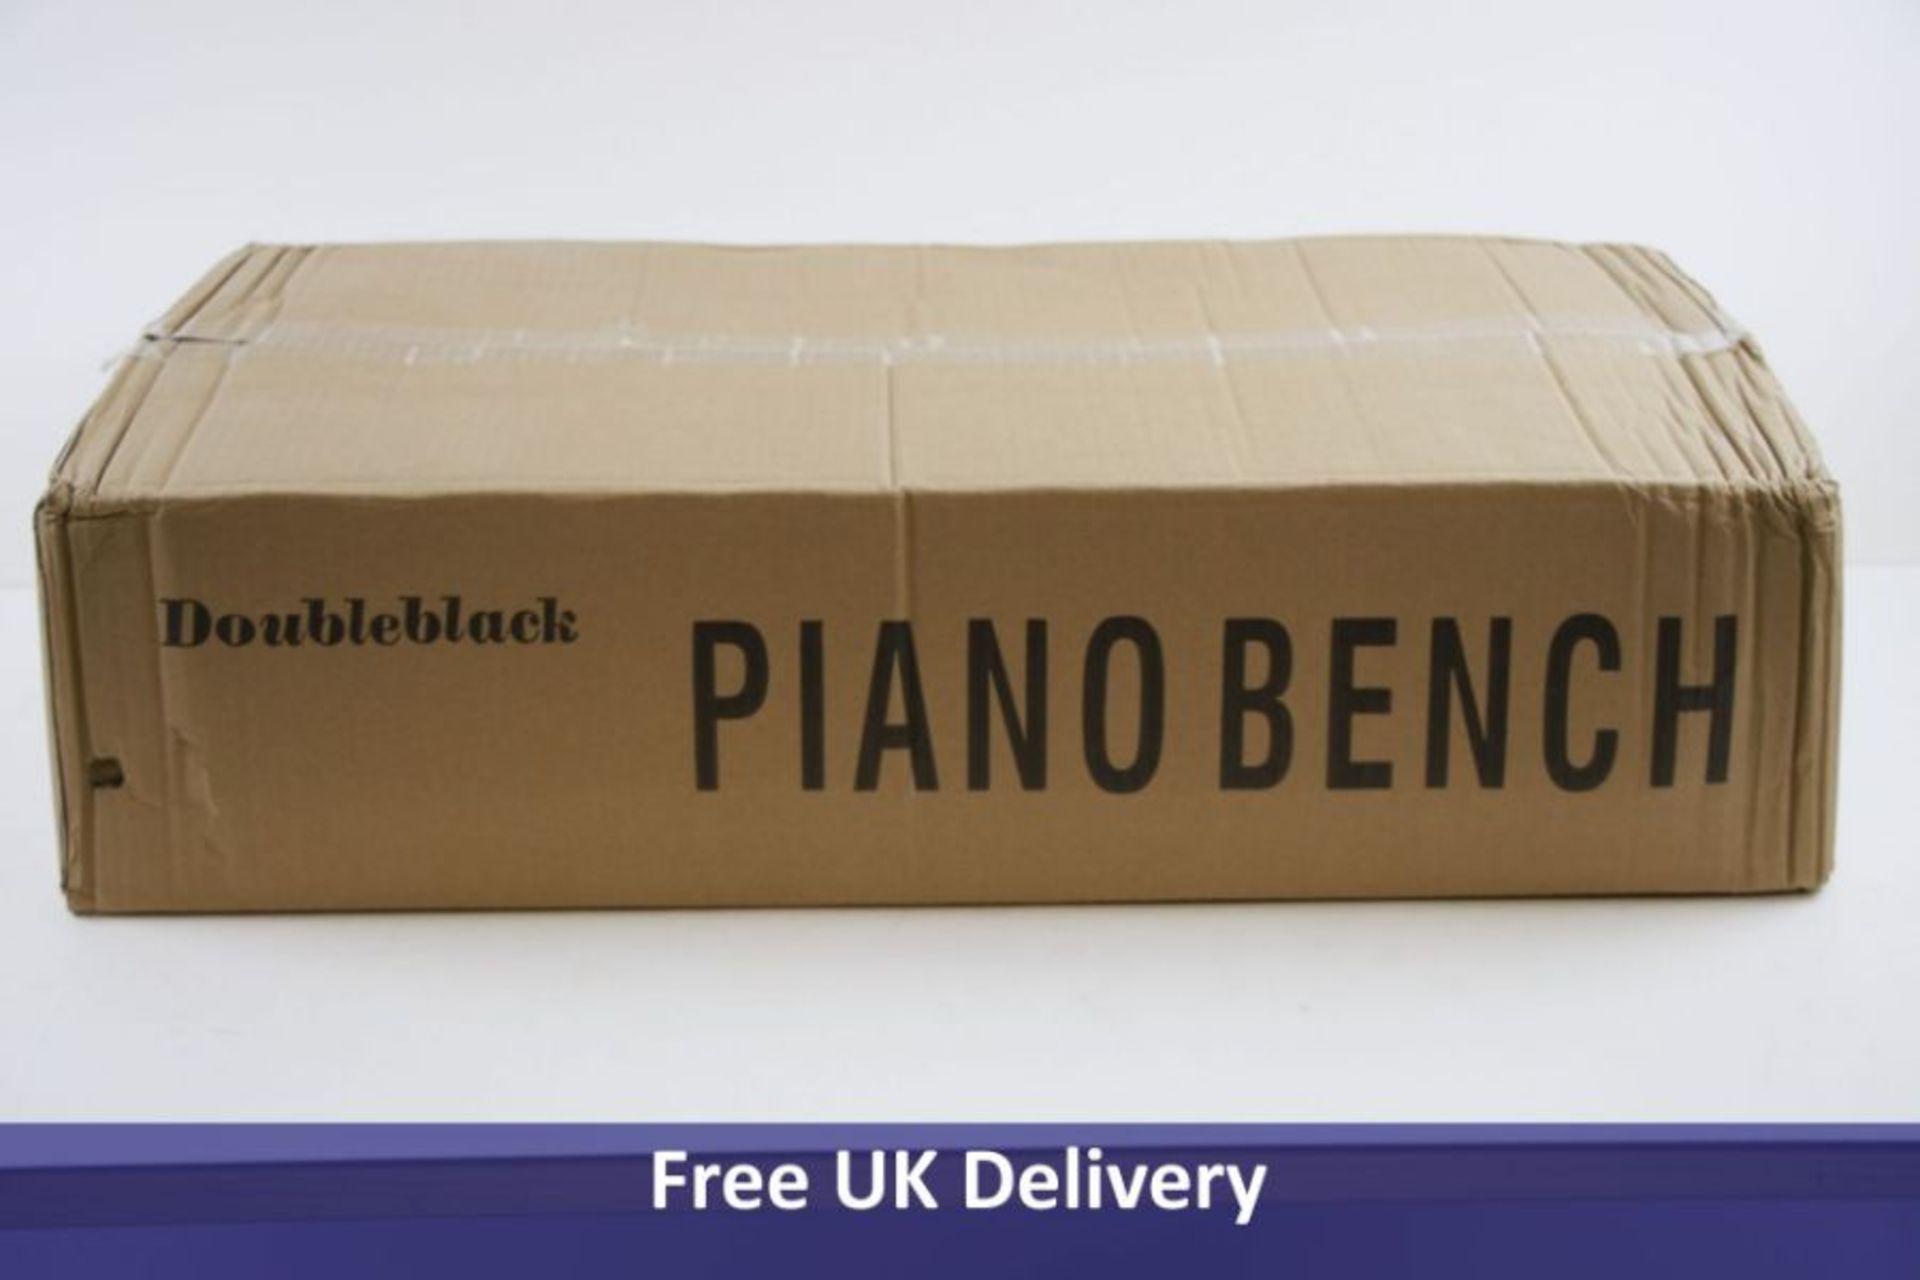 Doubleblack Piano Bench, 68x34x16.5cm, Black